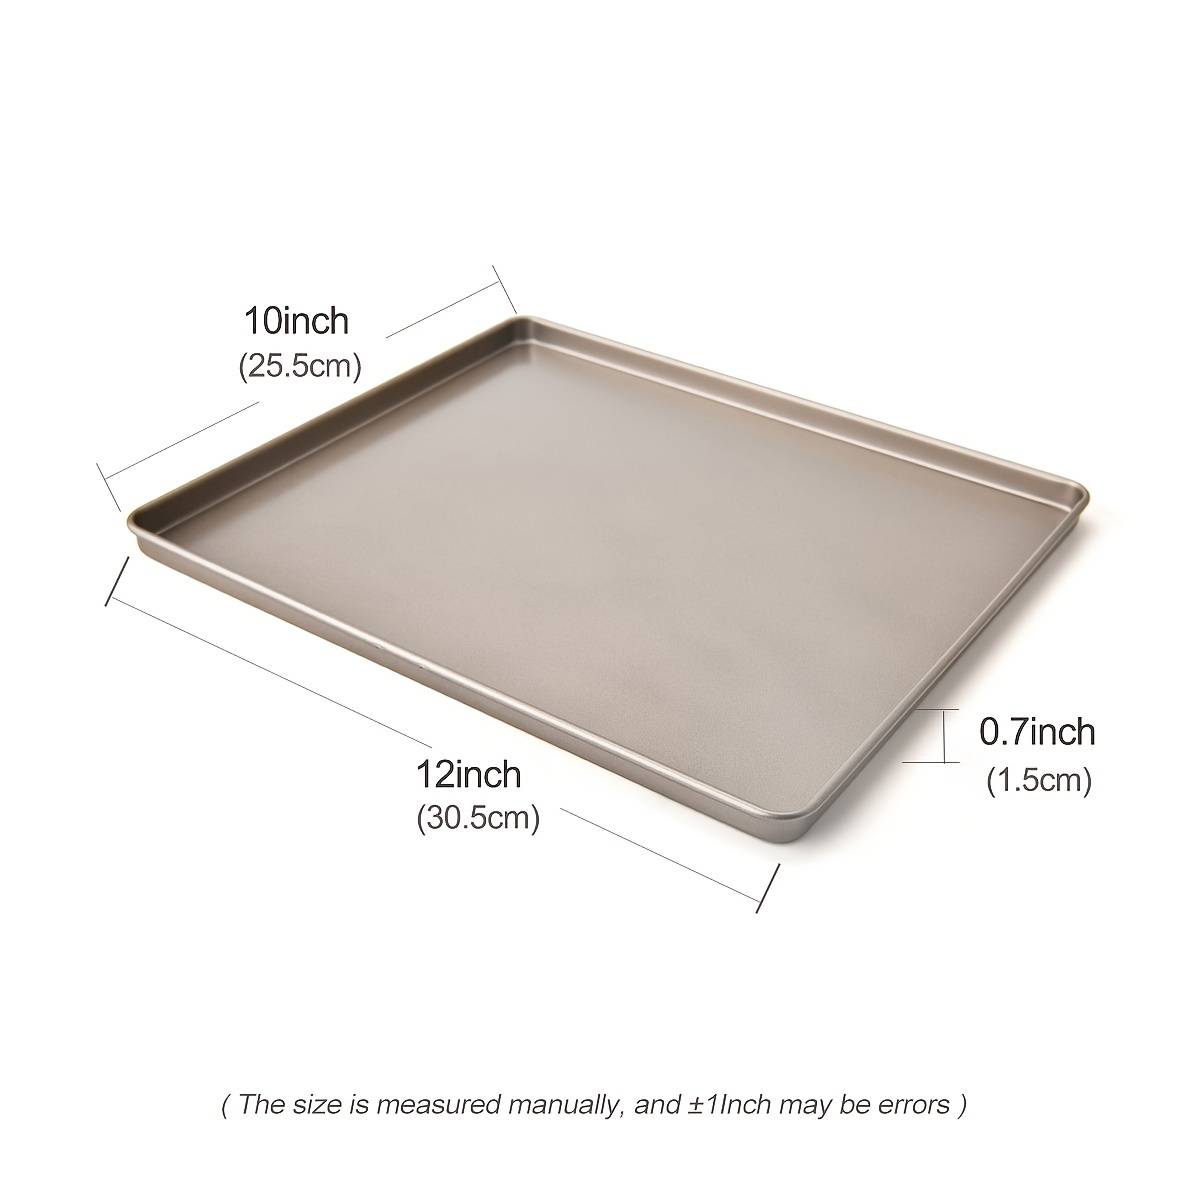 Baking Sheet Pans Cookie Tray Nonstick Heavy Carbon Steel - Temu